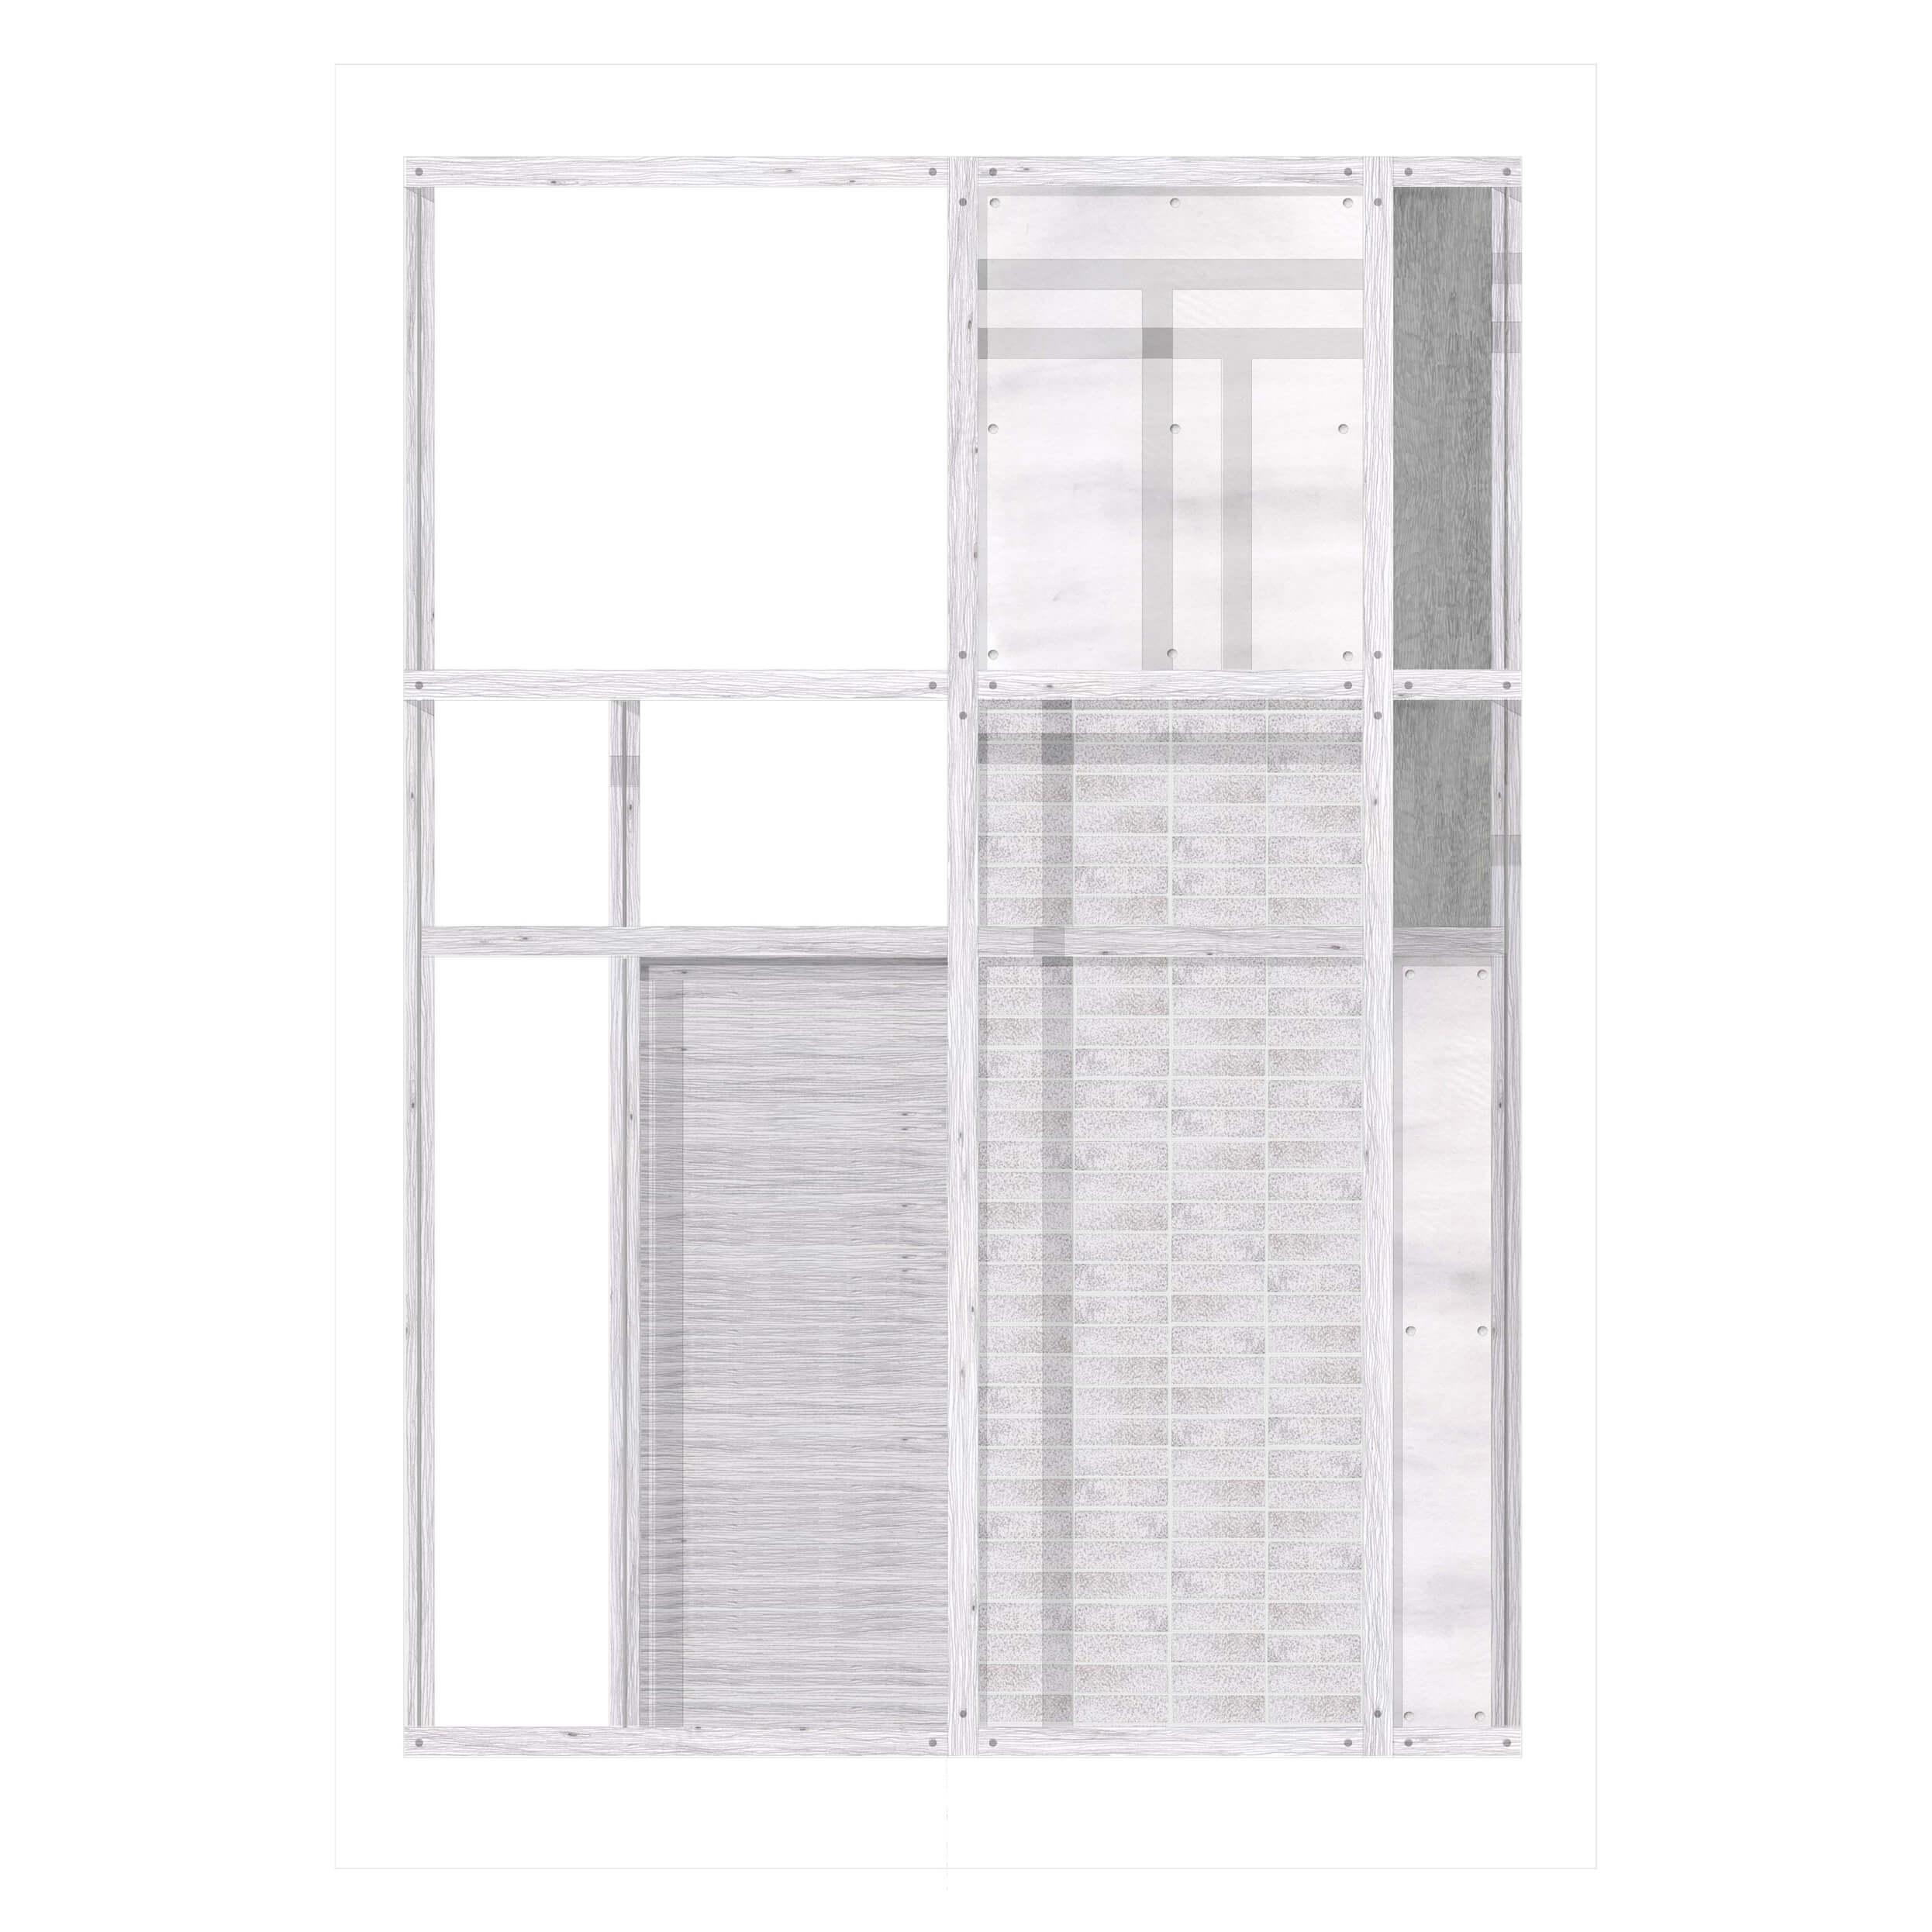 Steve Larkin Architects - Sounding-Boxes-01-Soundbox-1-5-Elevation-Brick-Timber-and-Concrete-A1